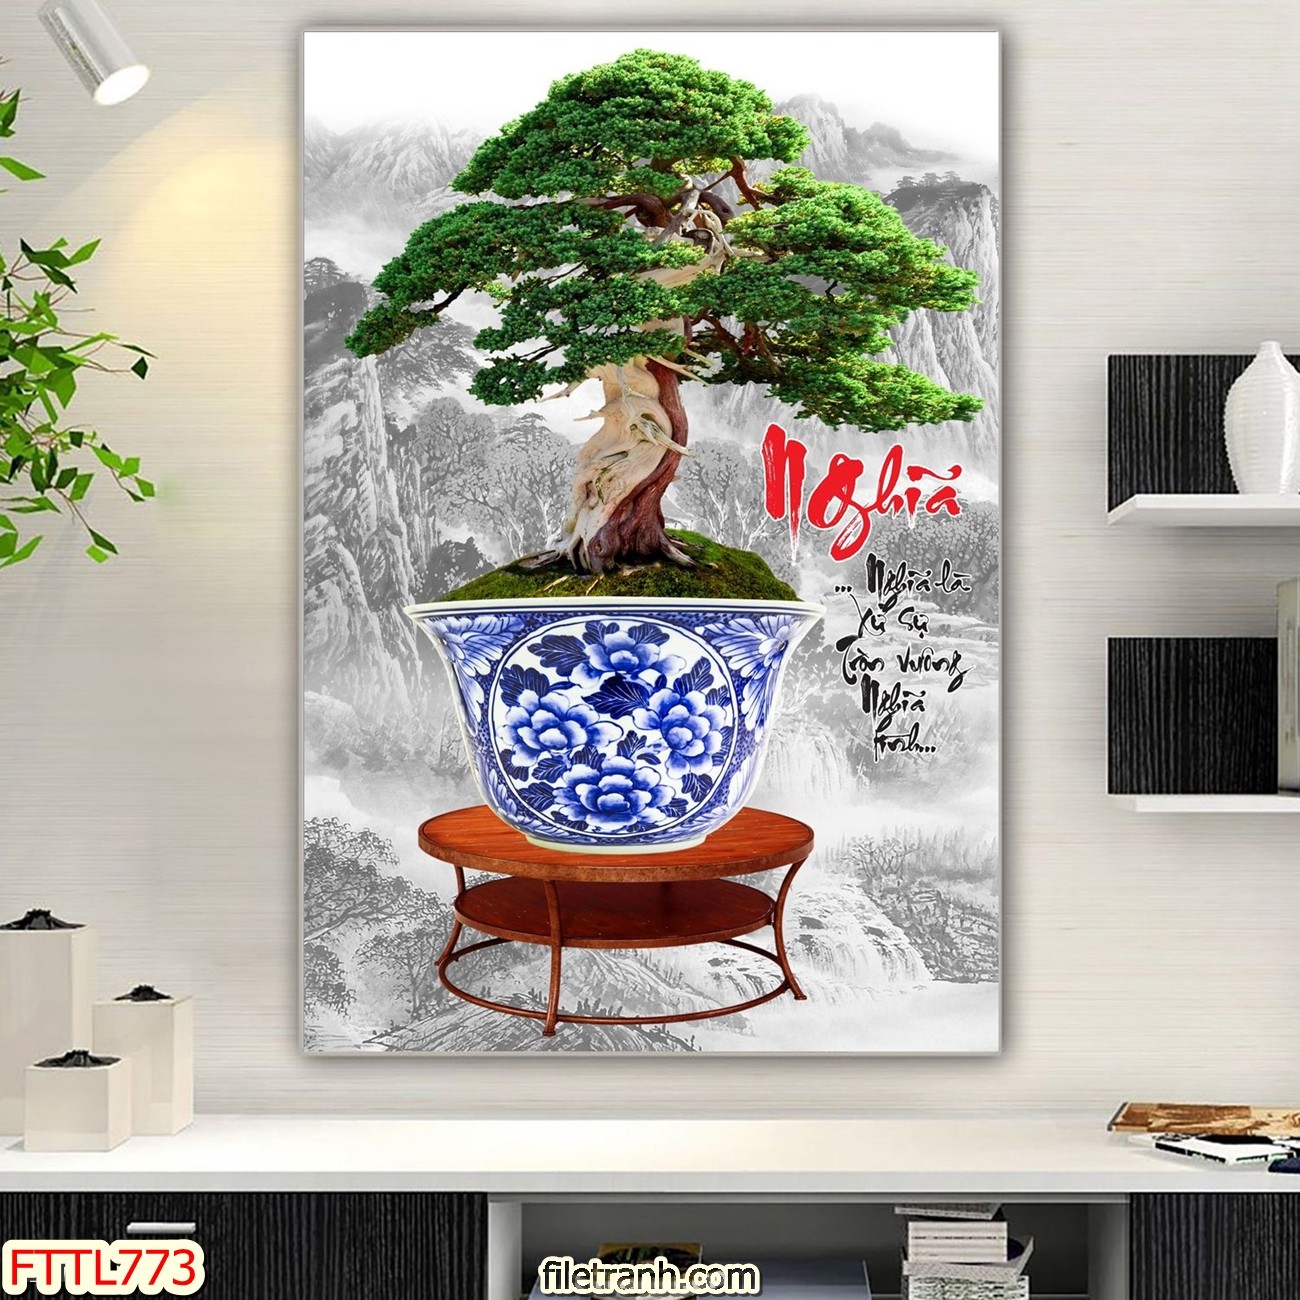 https://filetranh.com/file-tranh-chau-mai-bonsai/file-tranh-chau-mai-bonsai-fttl773.html